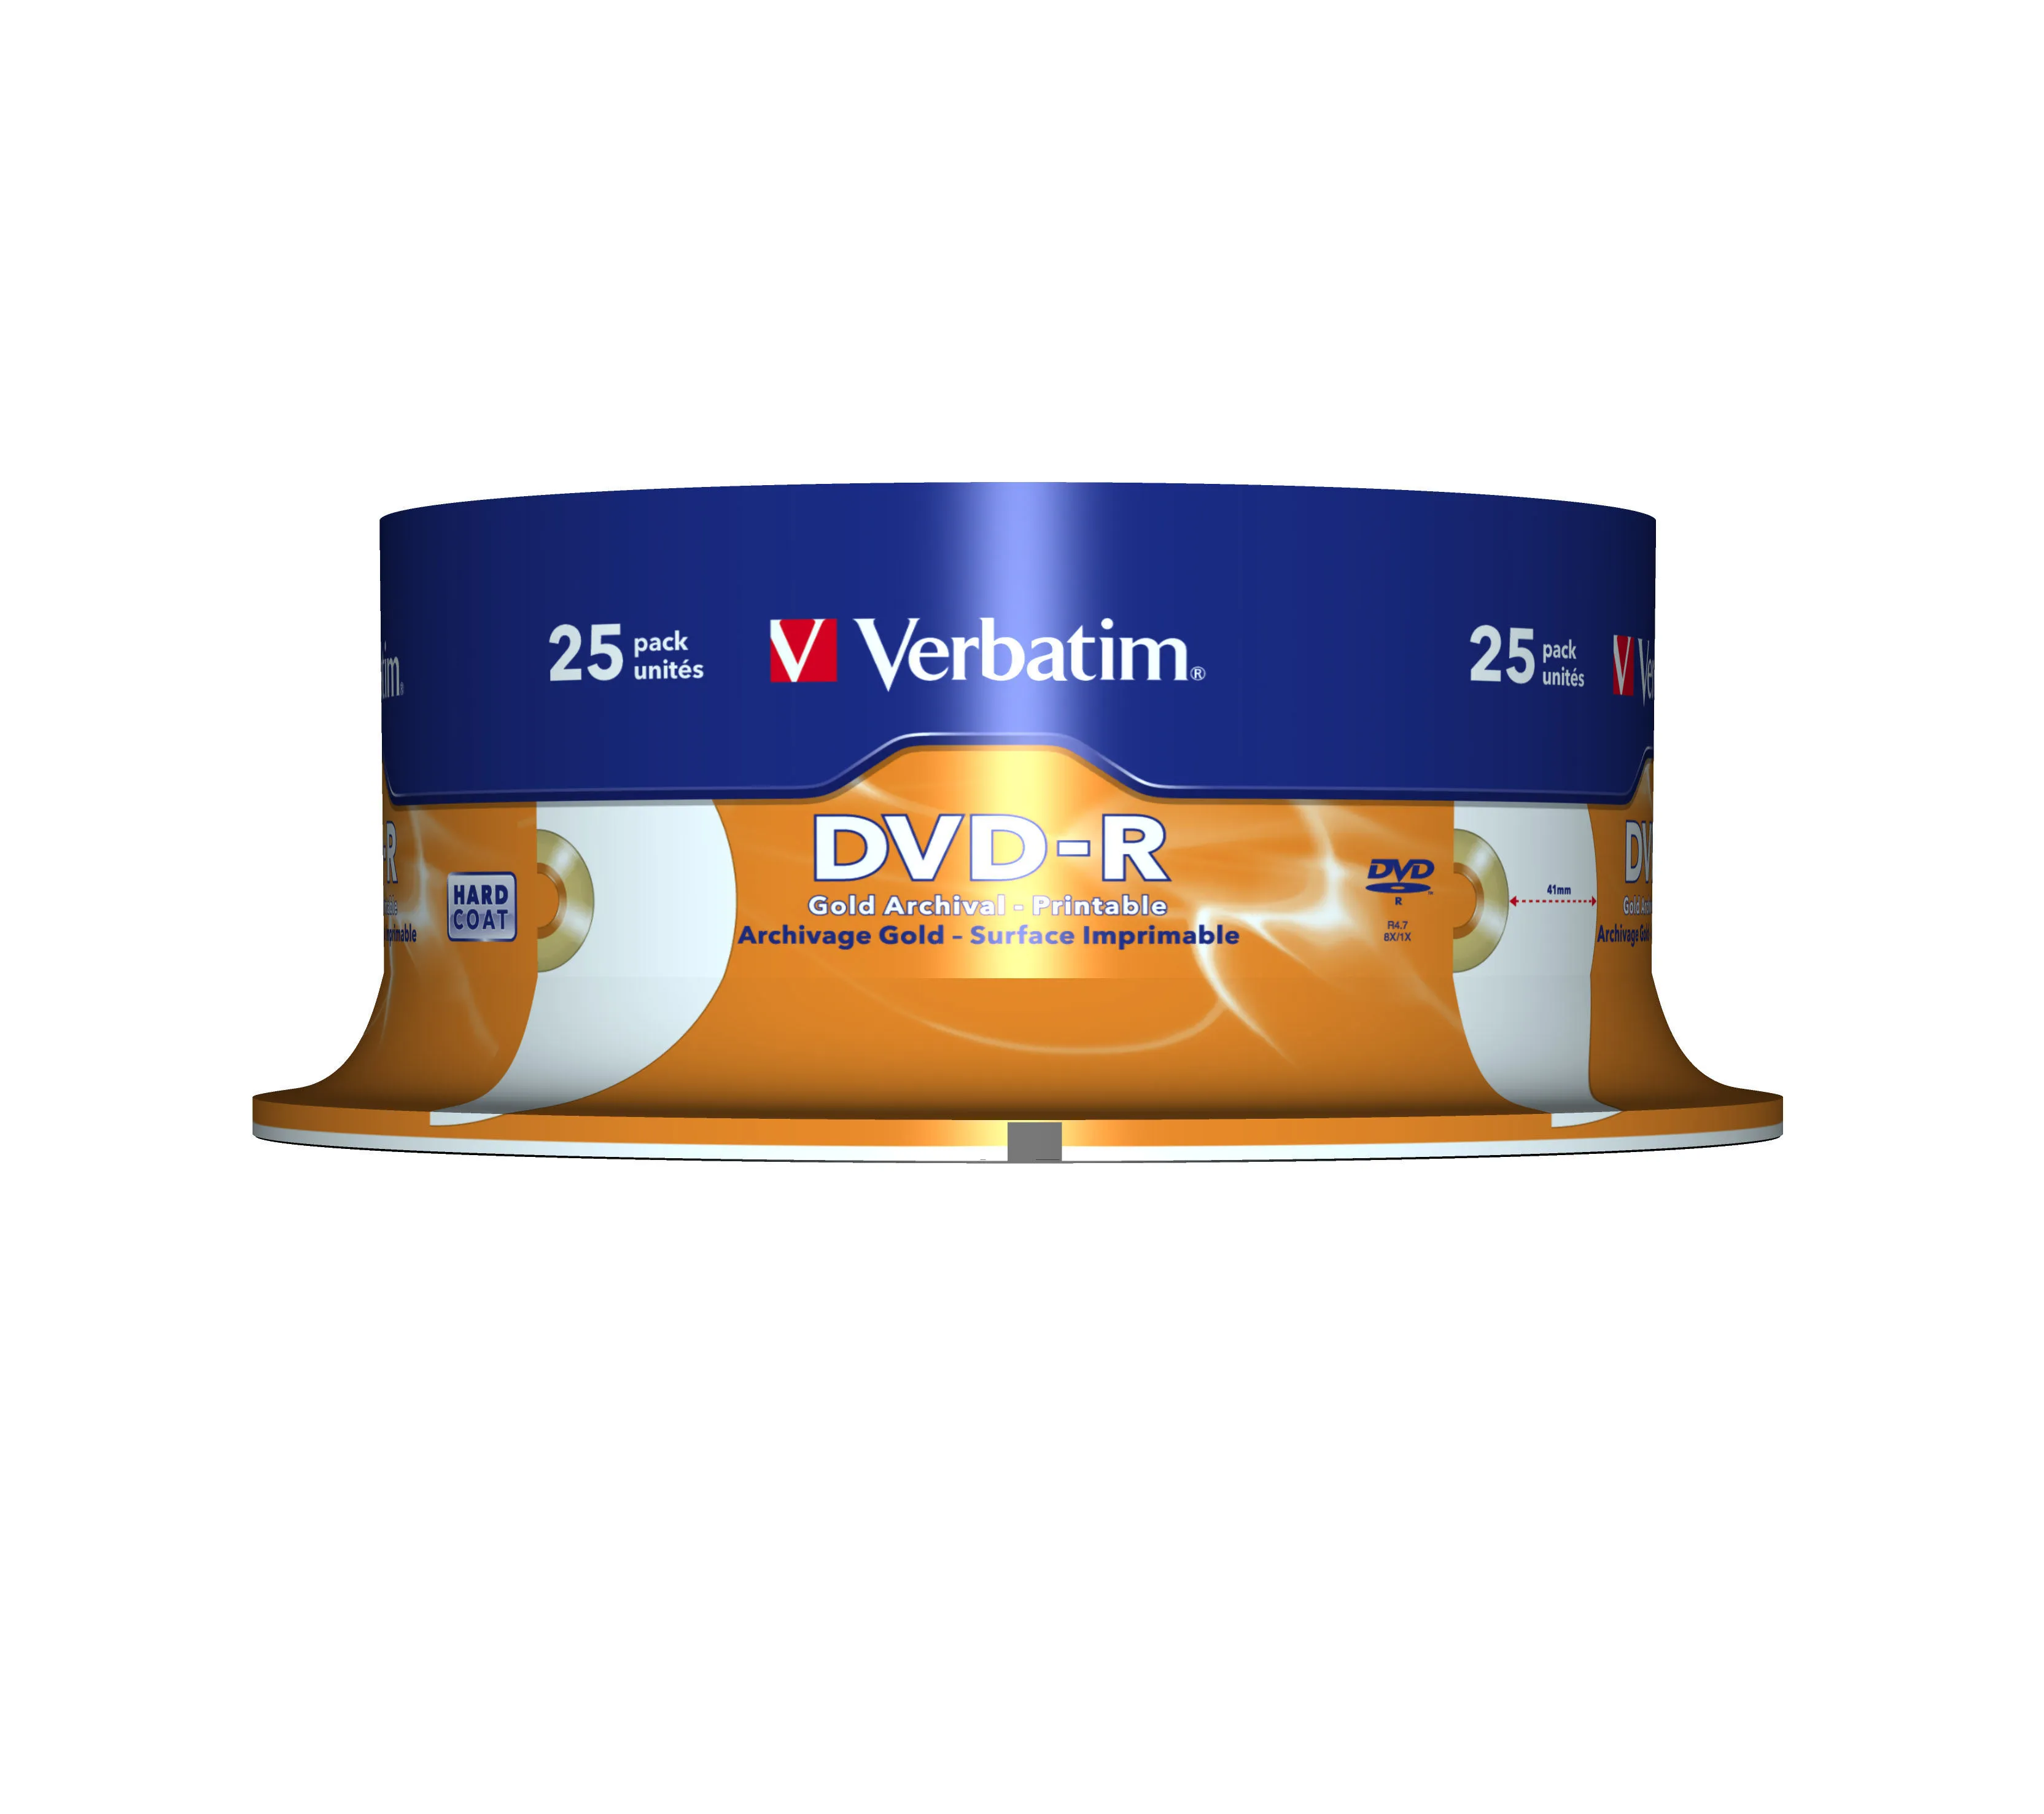 Vente Verbatim DVD-R Archival Grade Verbatim au meilleur prix - visuel 2